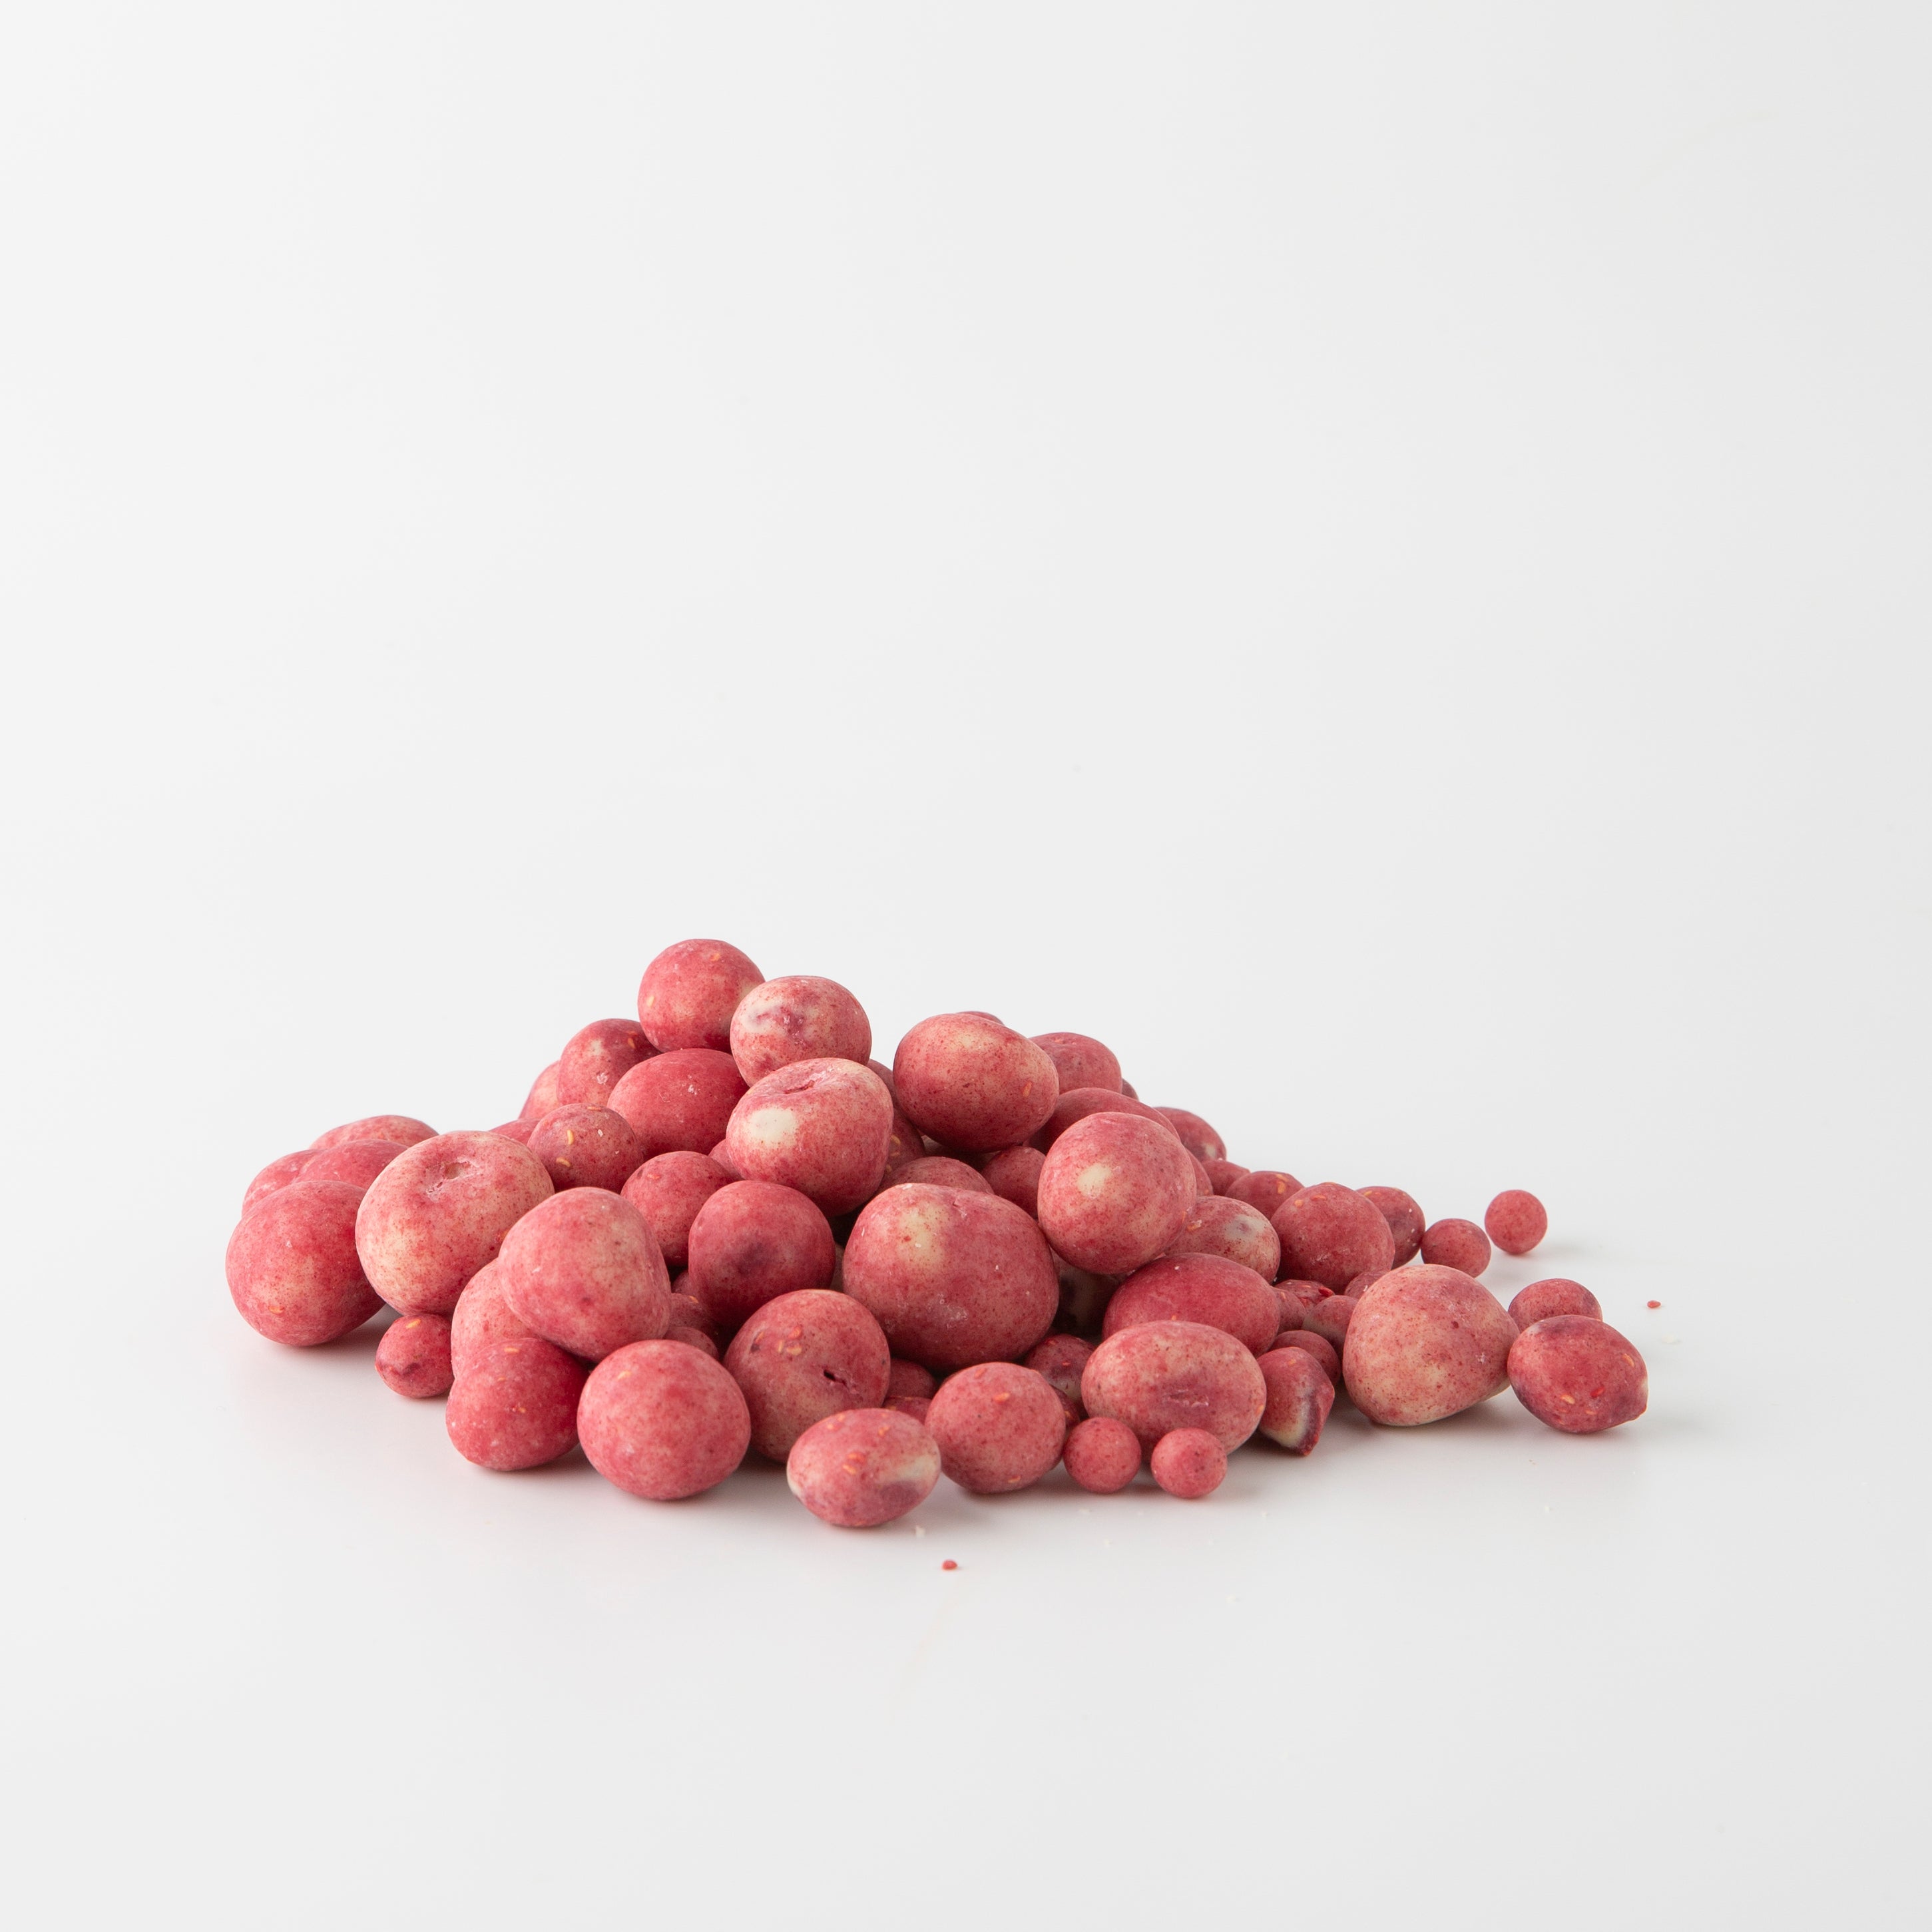 White Chocolate Freeze Dried Raspberries (Chocolates) Image 2 - Naked Foods